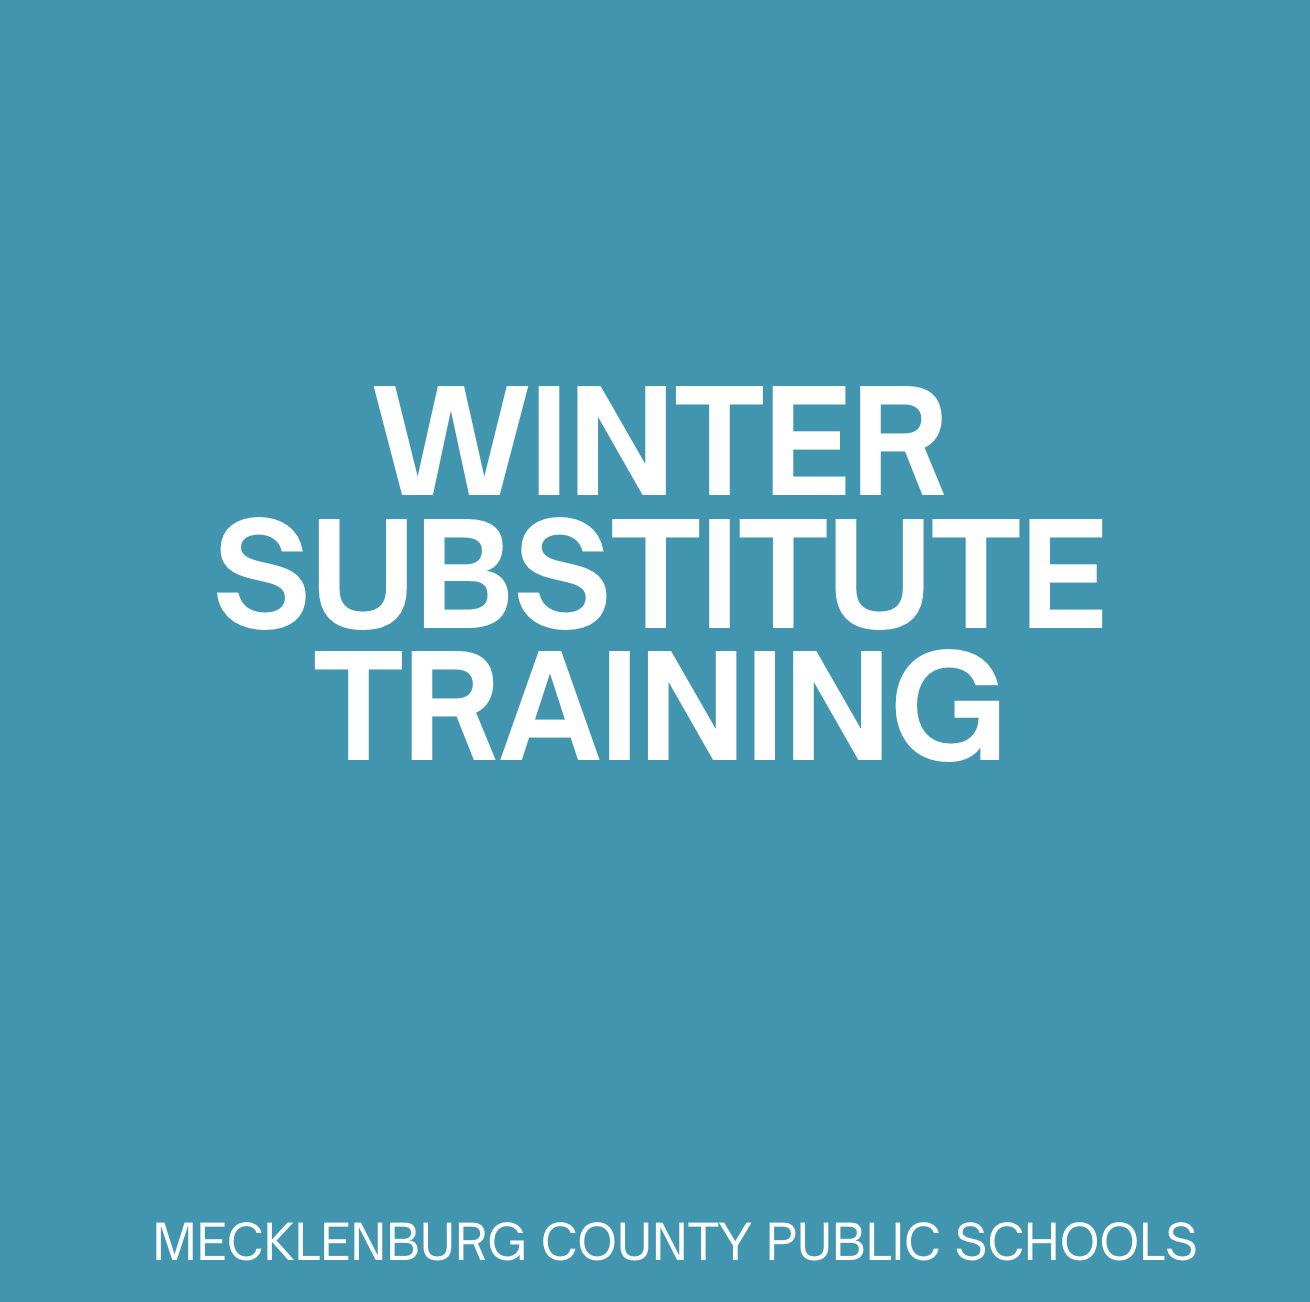 Winter Substitute Training – February 7